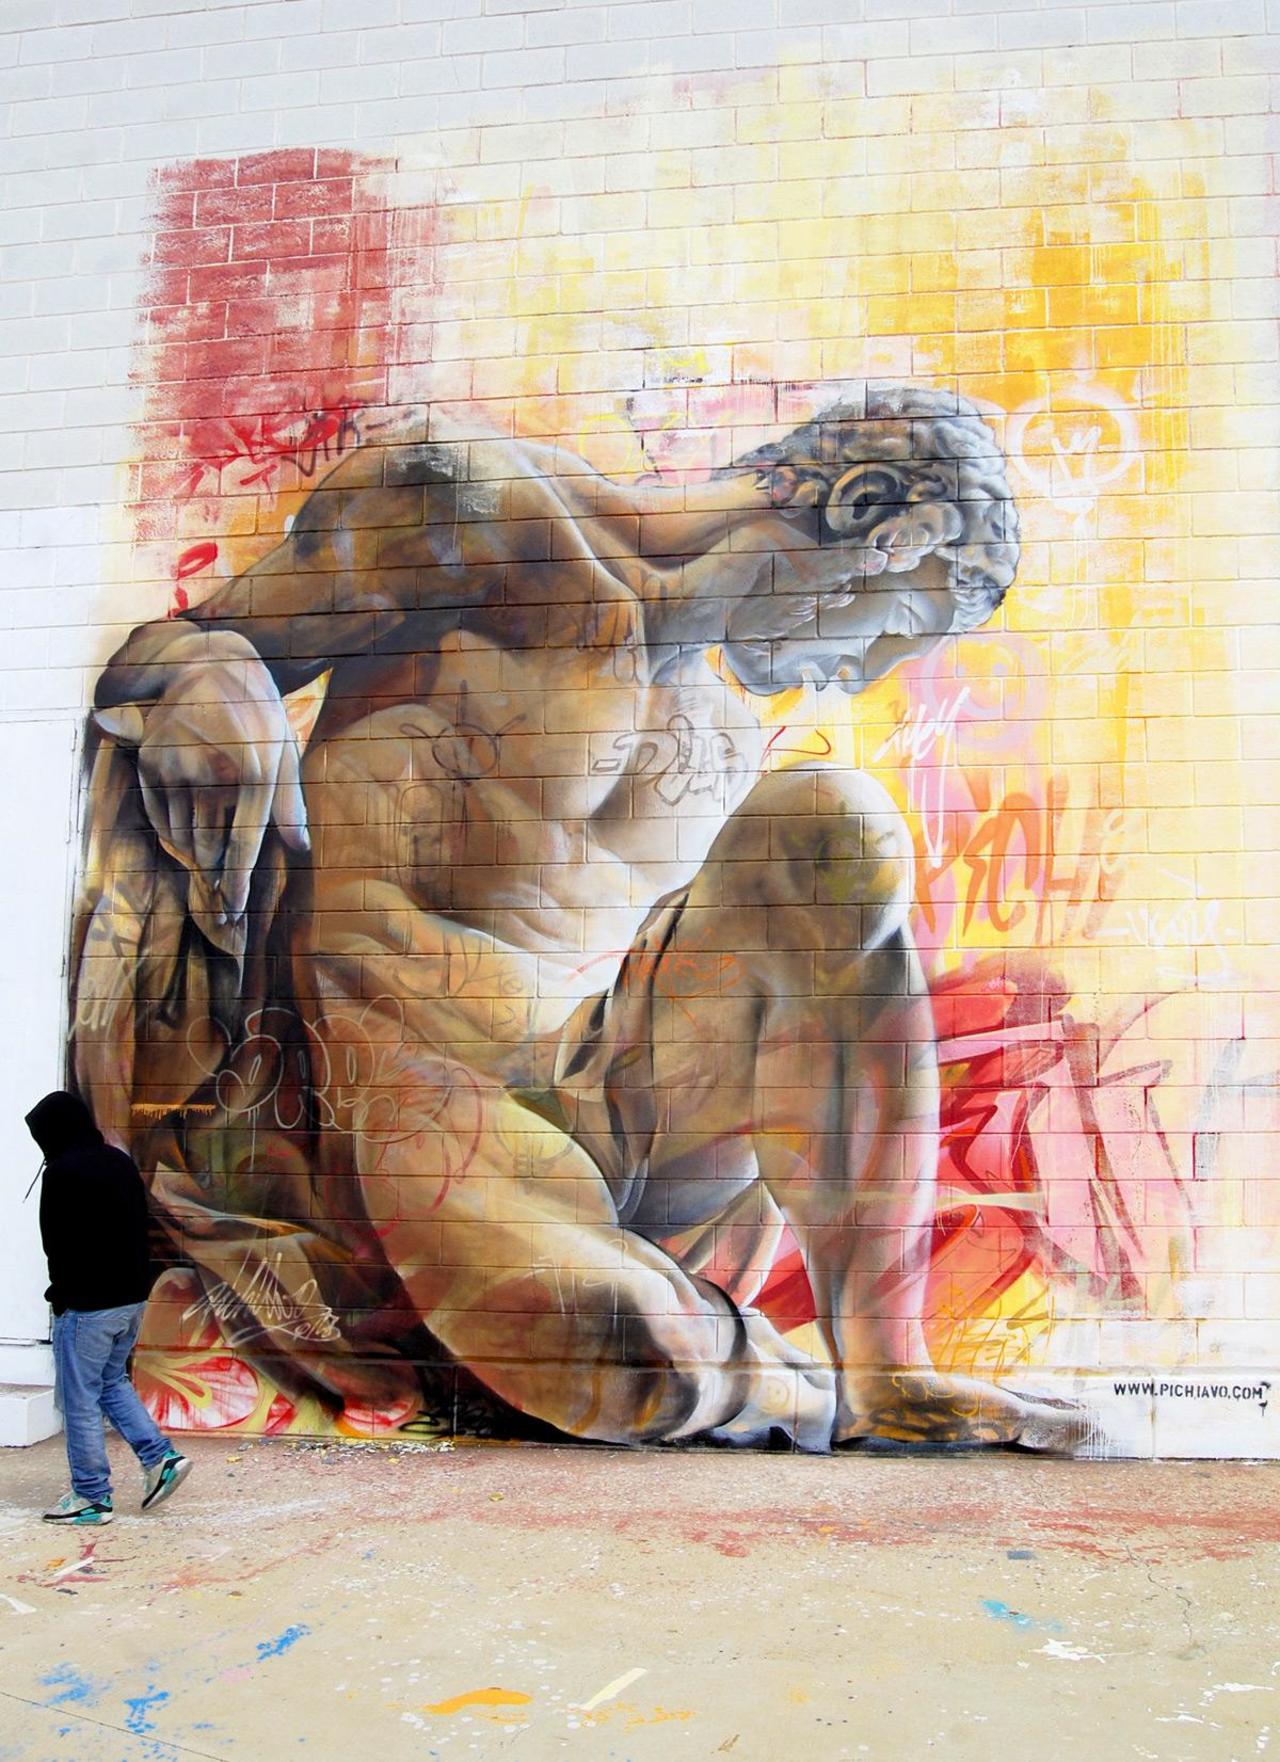 Breathtaking #Graffiti Murals of Greek Gods 
@PichiAvo #StreetArt #Mural #GreekGods
http://bit.ly/1Ev9dq8 http://t.co/oJtcjKEXEs